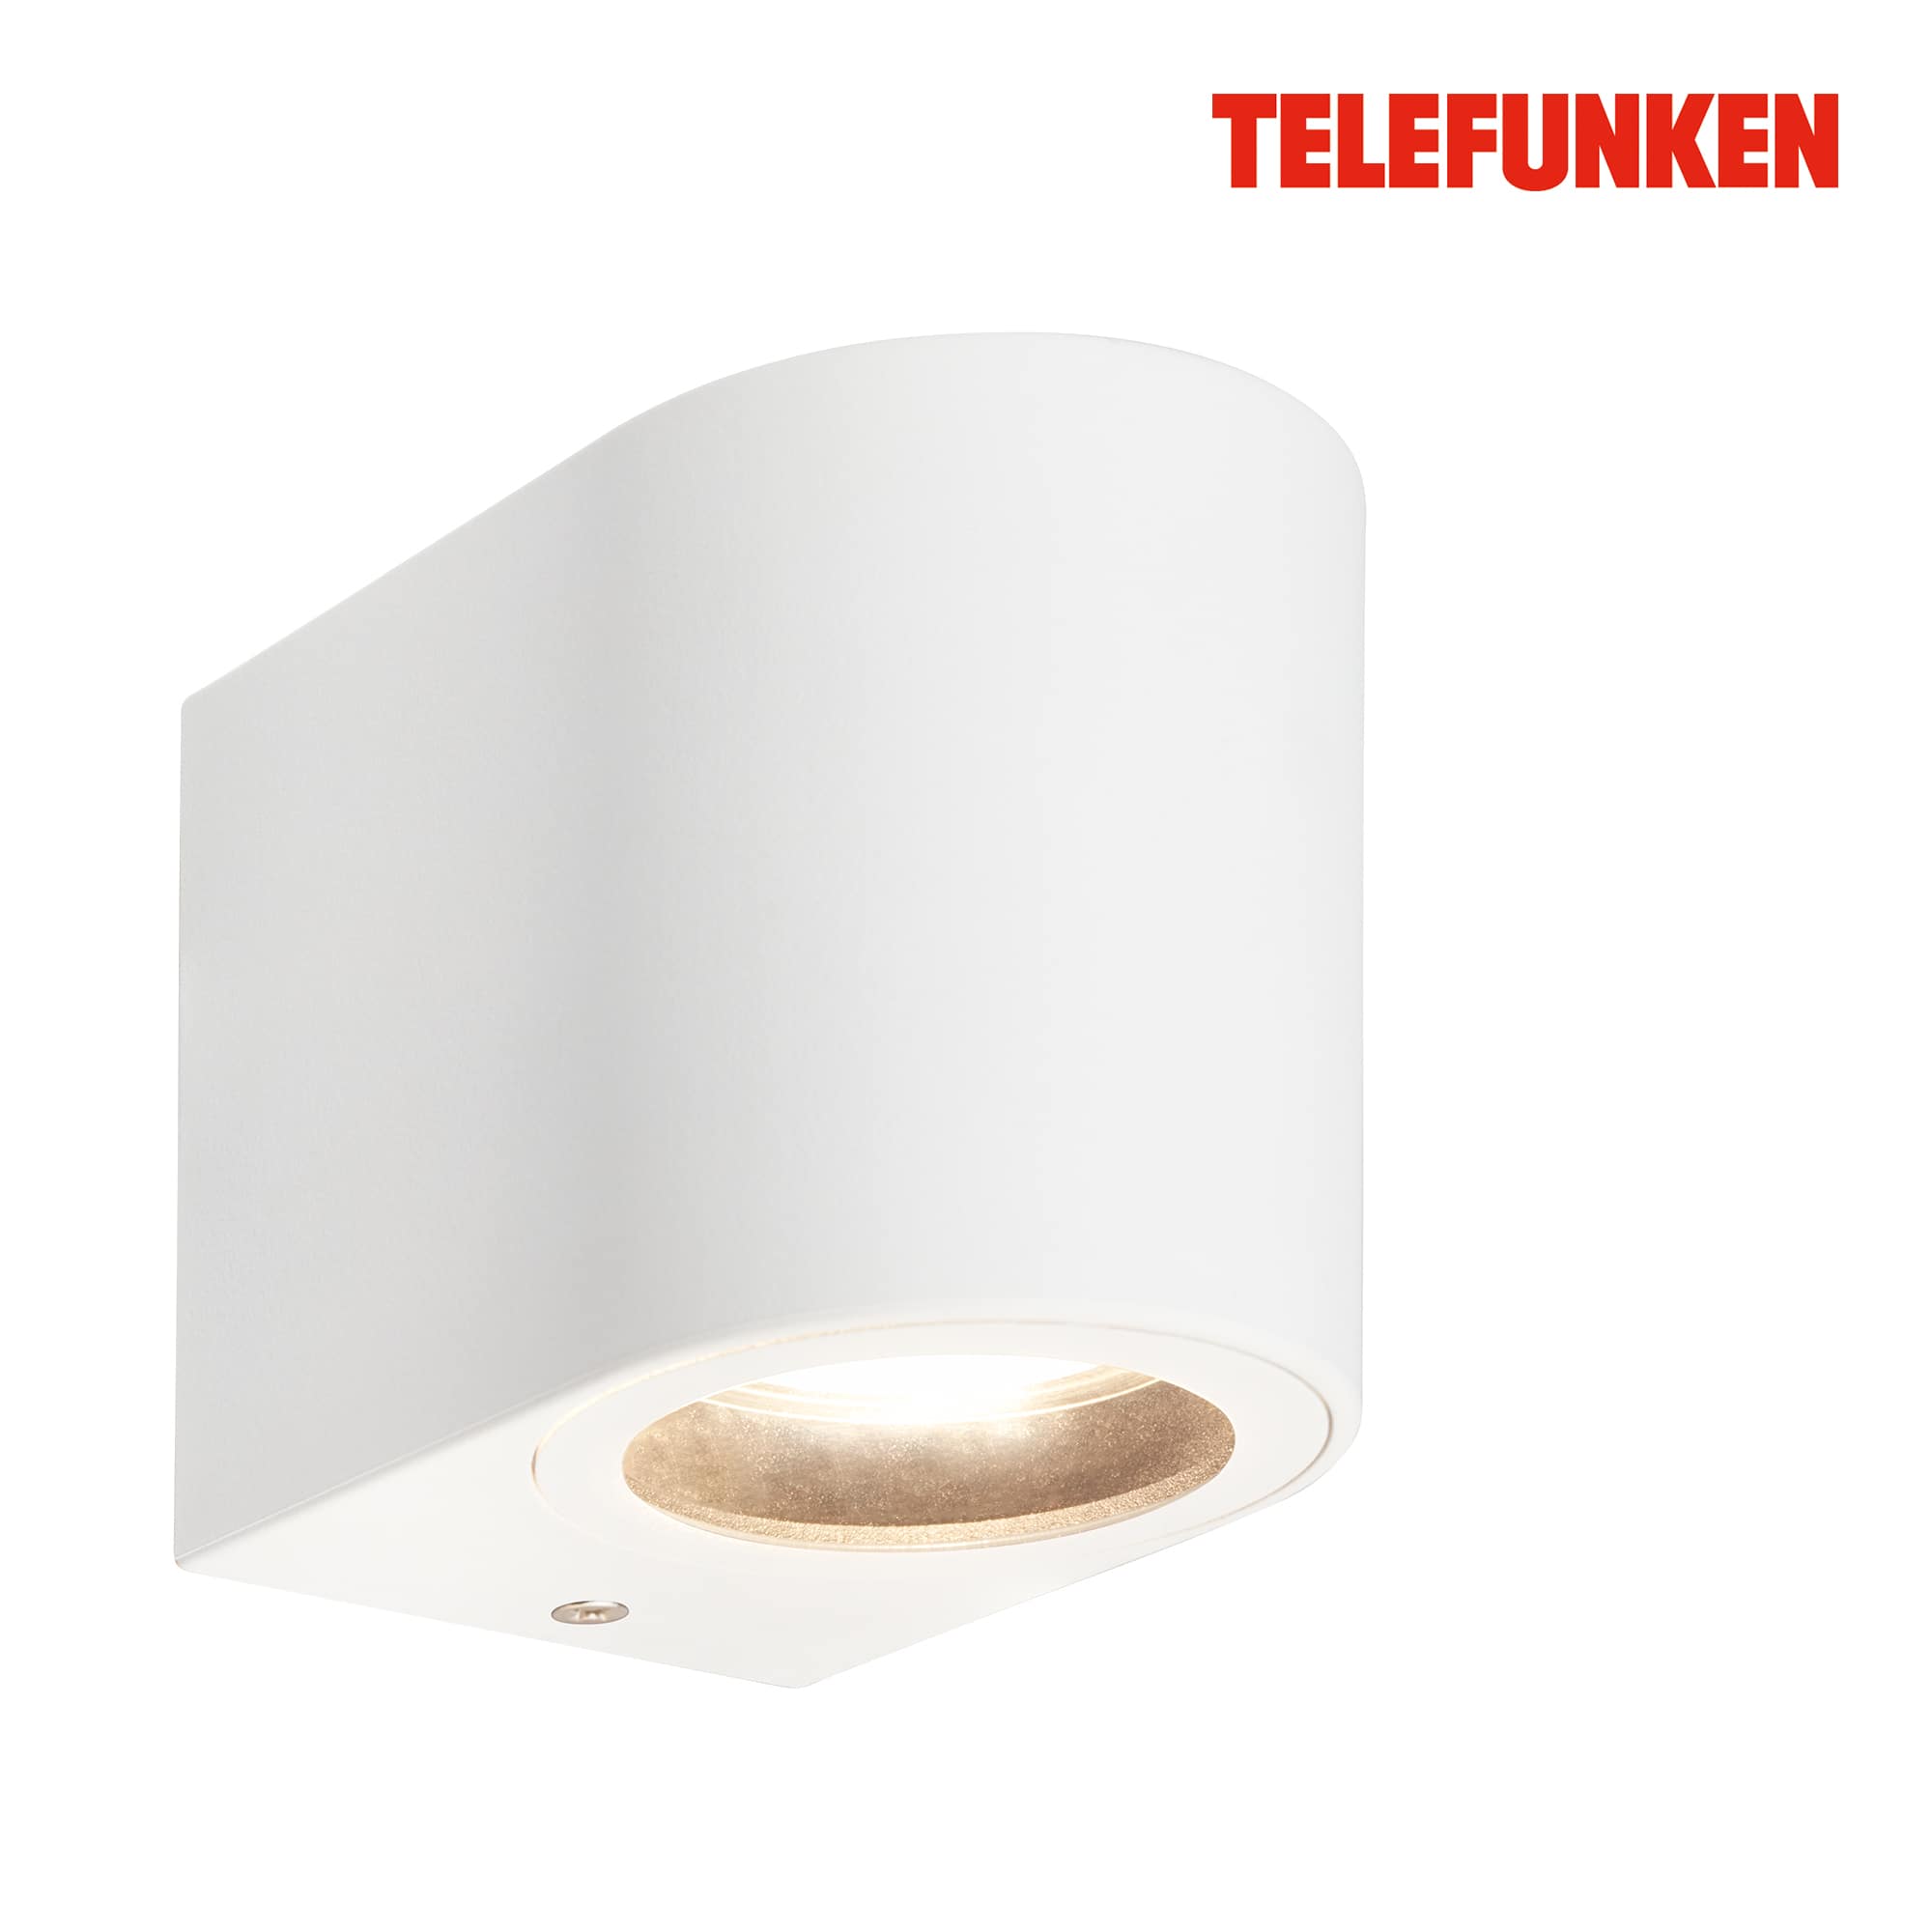 Telefunken LED wall lamp, splash-proof, on/off via wall switch